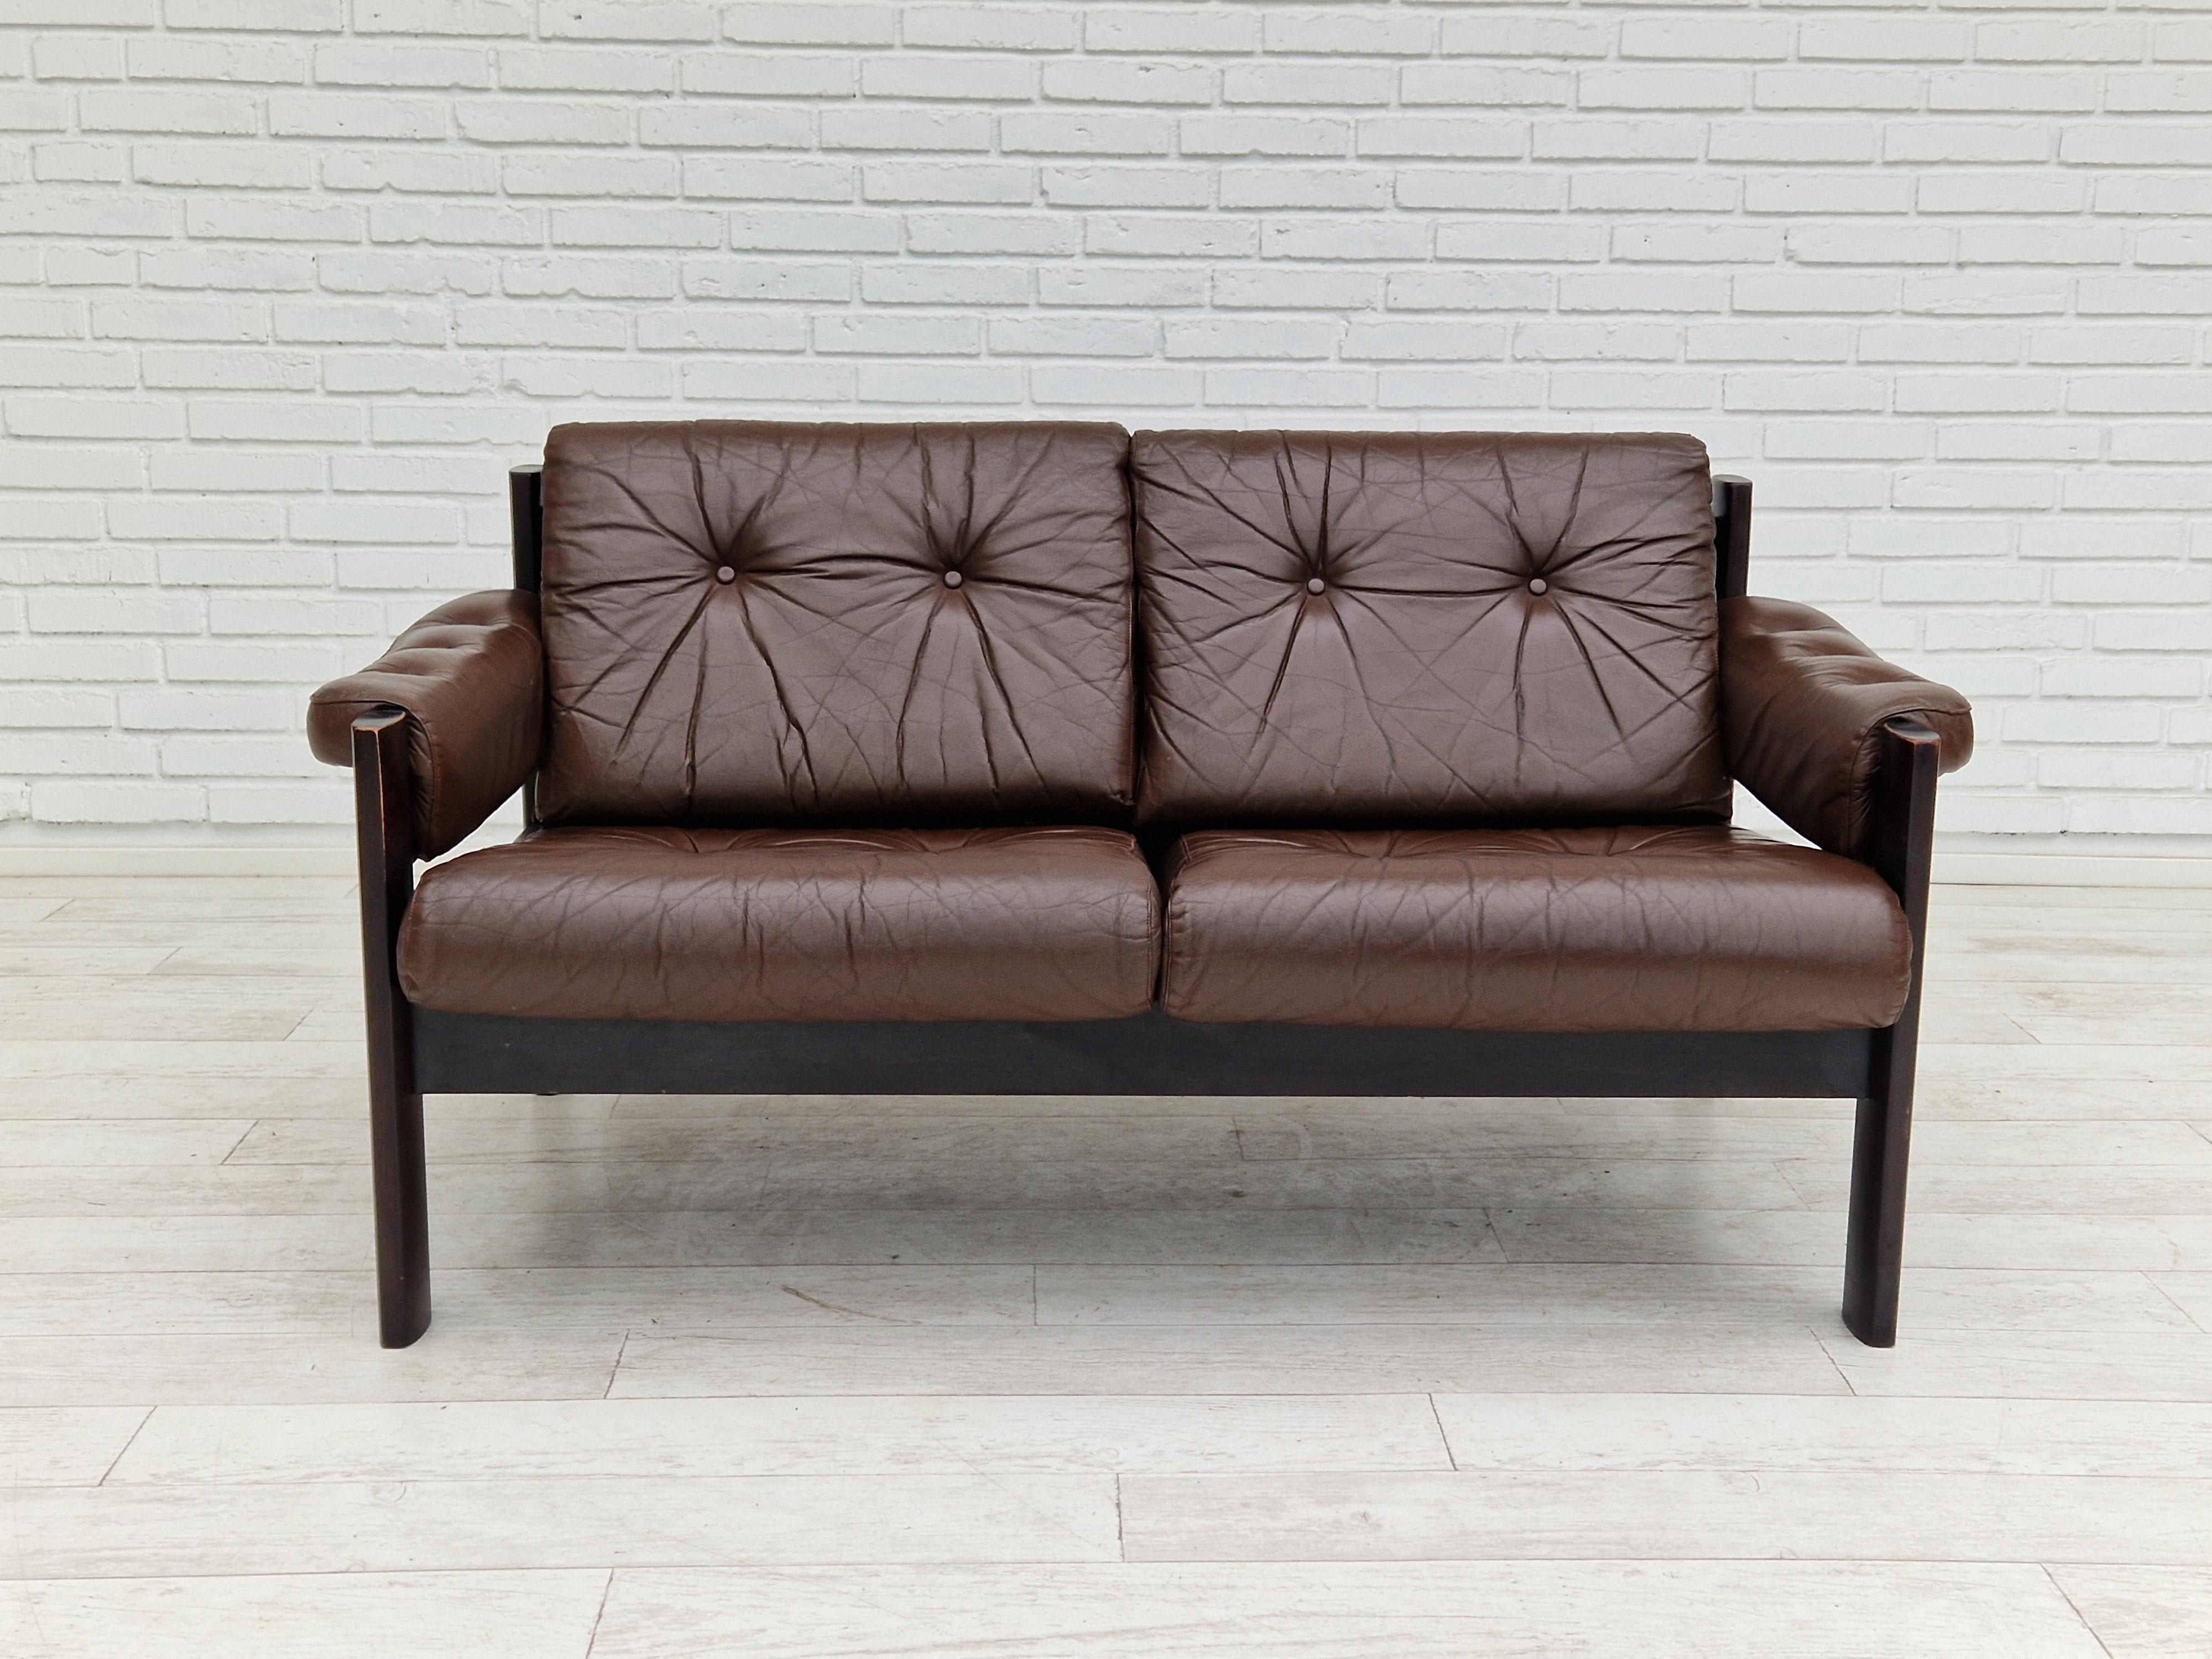 Swedish 1970s, Scandinavian 2-Seater Sofa, Original Condition, Brown Leather